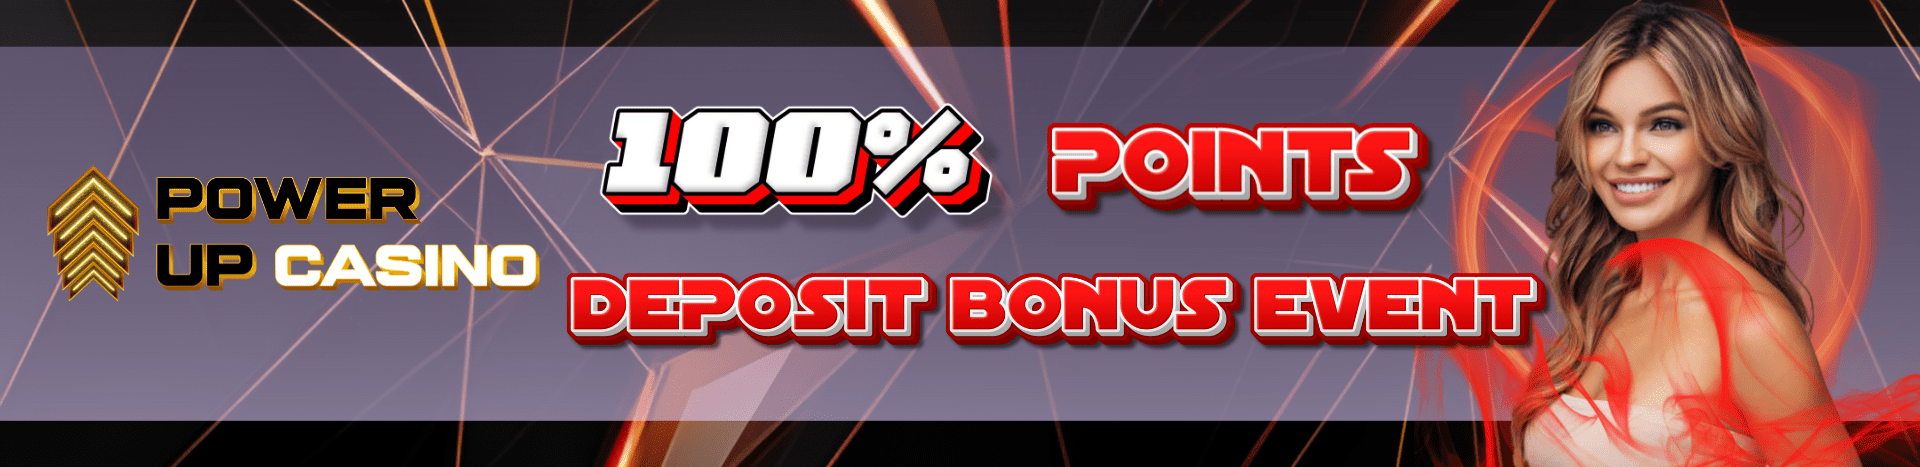 Power Up 100% Points Deposit Bonus Promotions